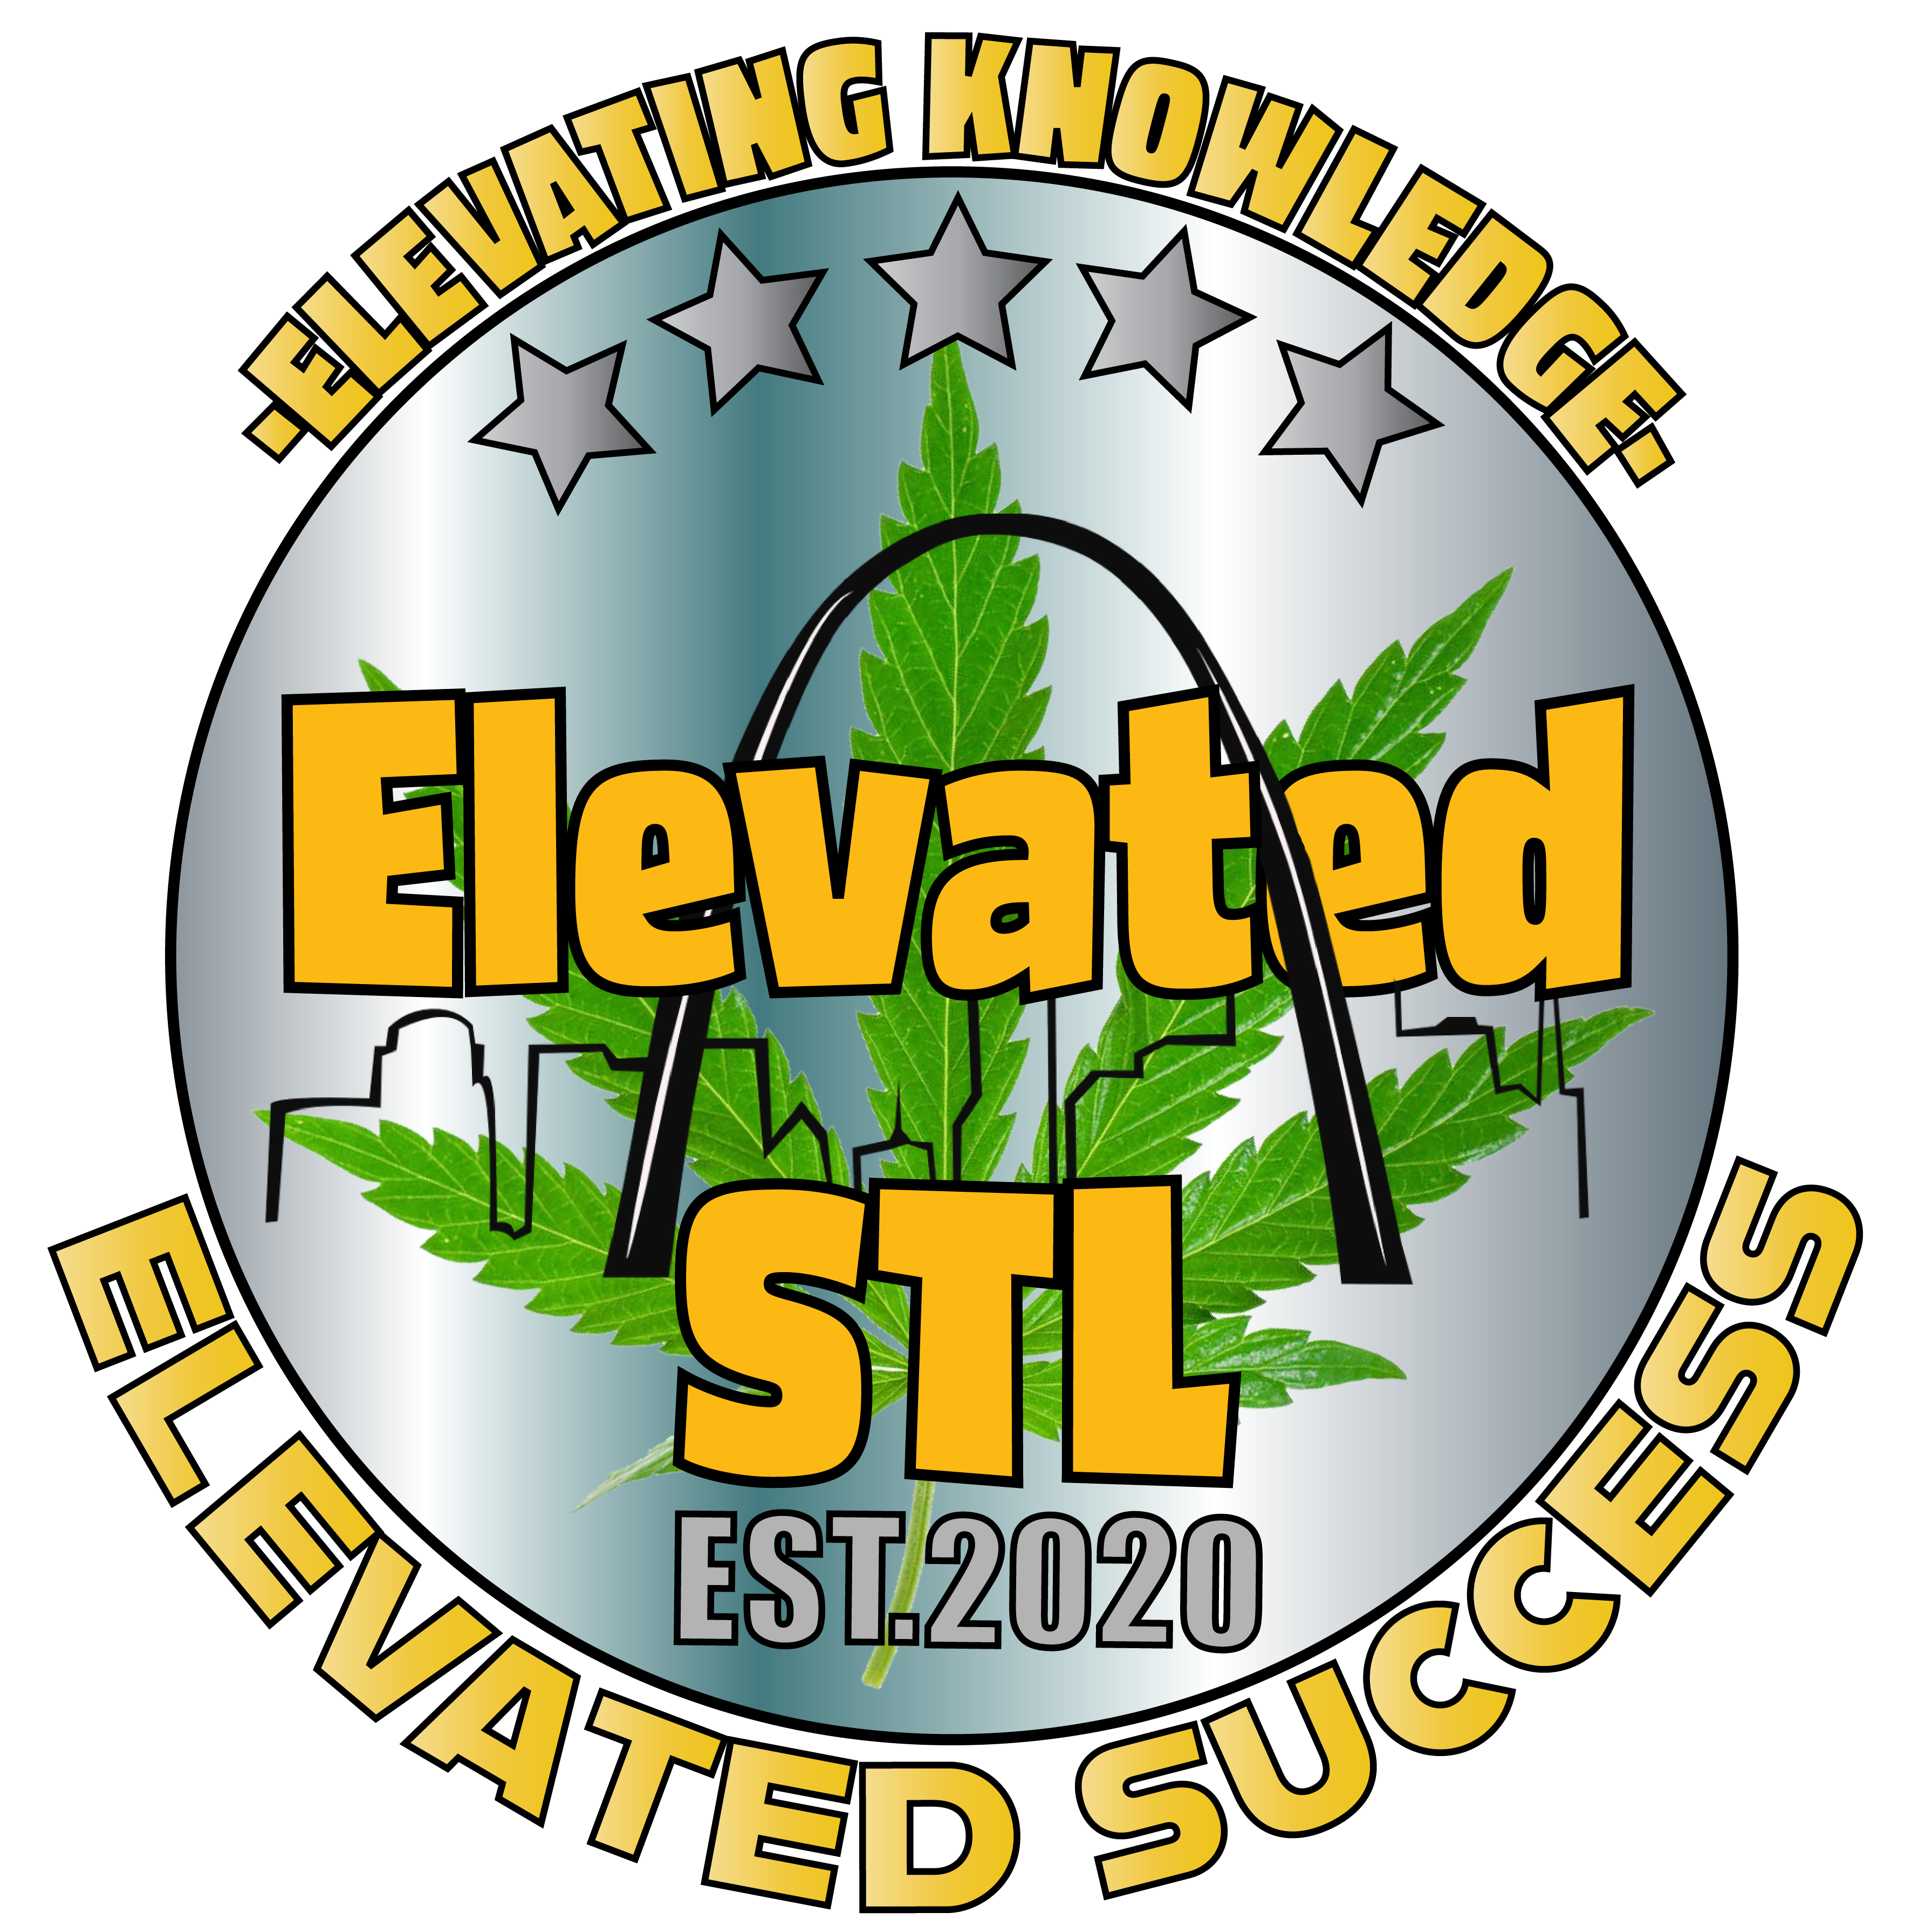 Elevated STL, Elevated Saint Louis, STL, ElevatedSTLouis, Masked Grower, Design, Genetics, Masked Growers, Elevated STL, Saint Louis, MO